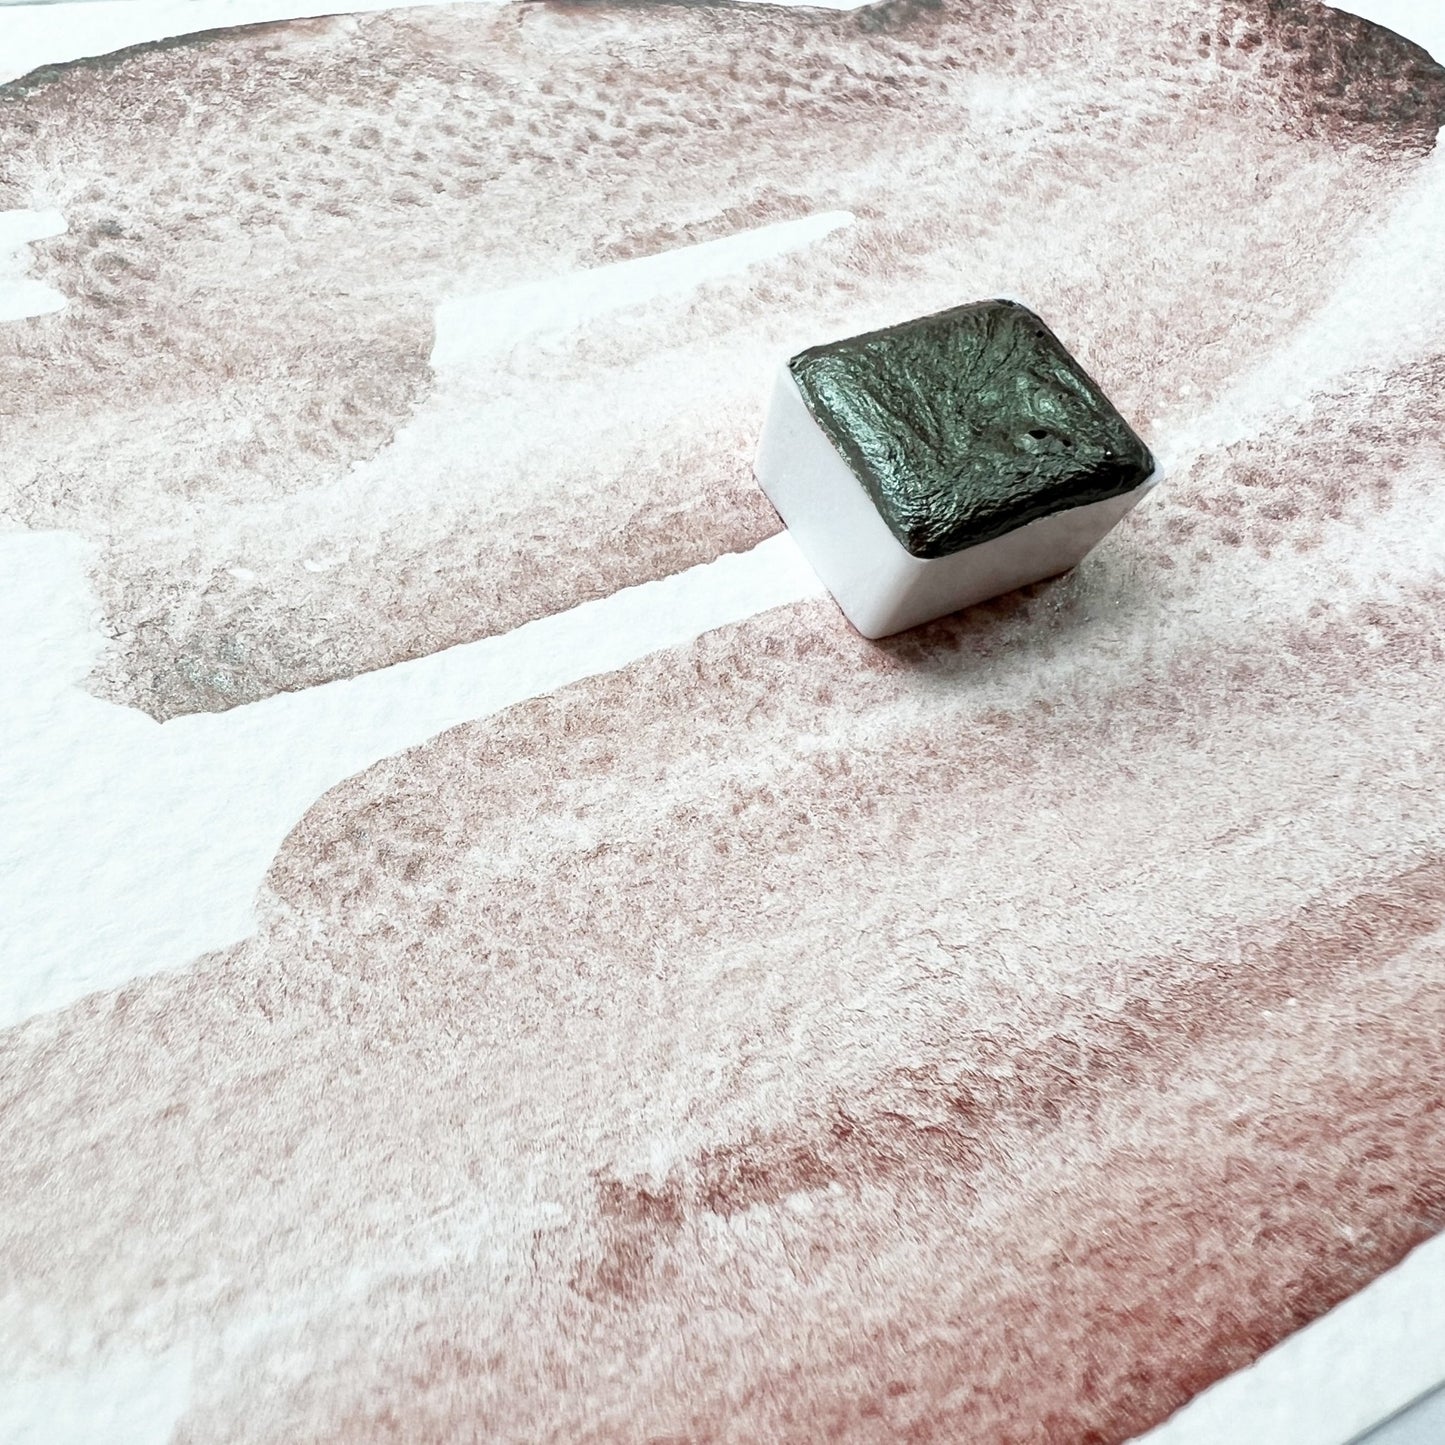 Mars Dust. Half pan, full pan or bottle cap of handmade watercolor paint